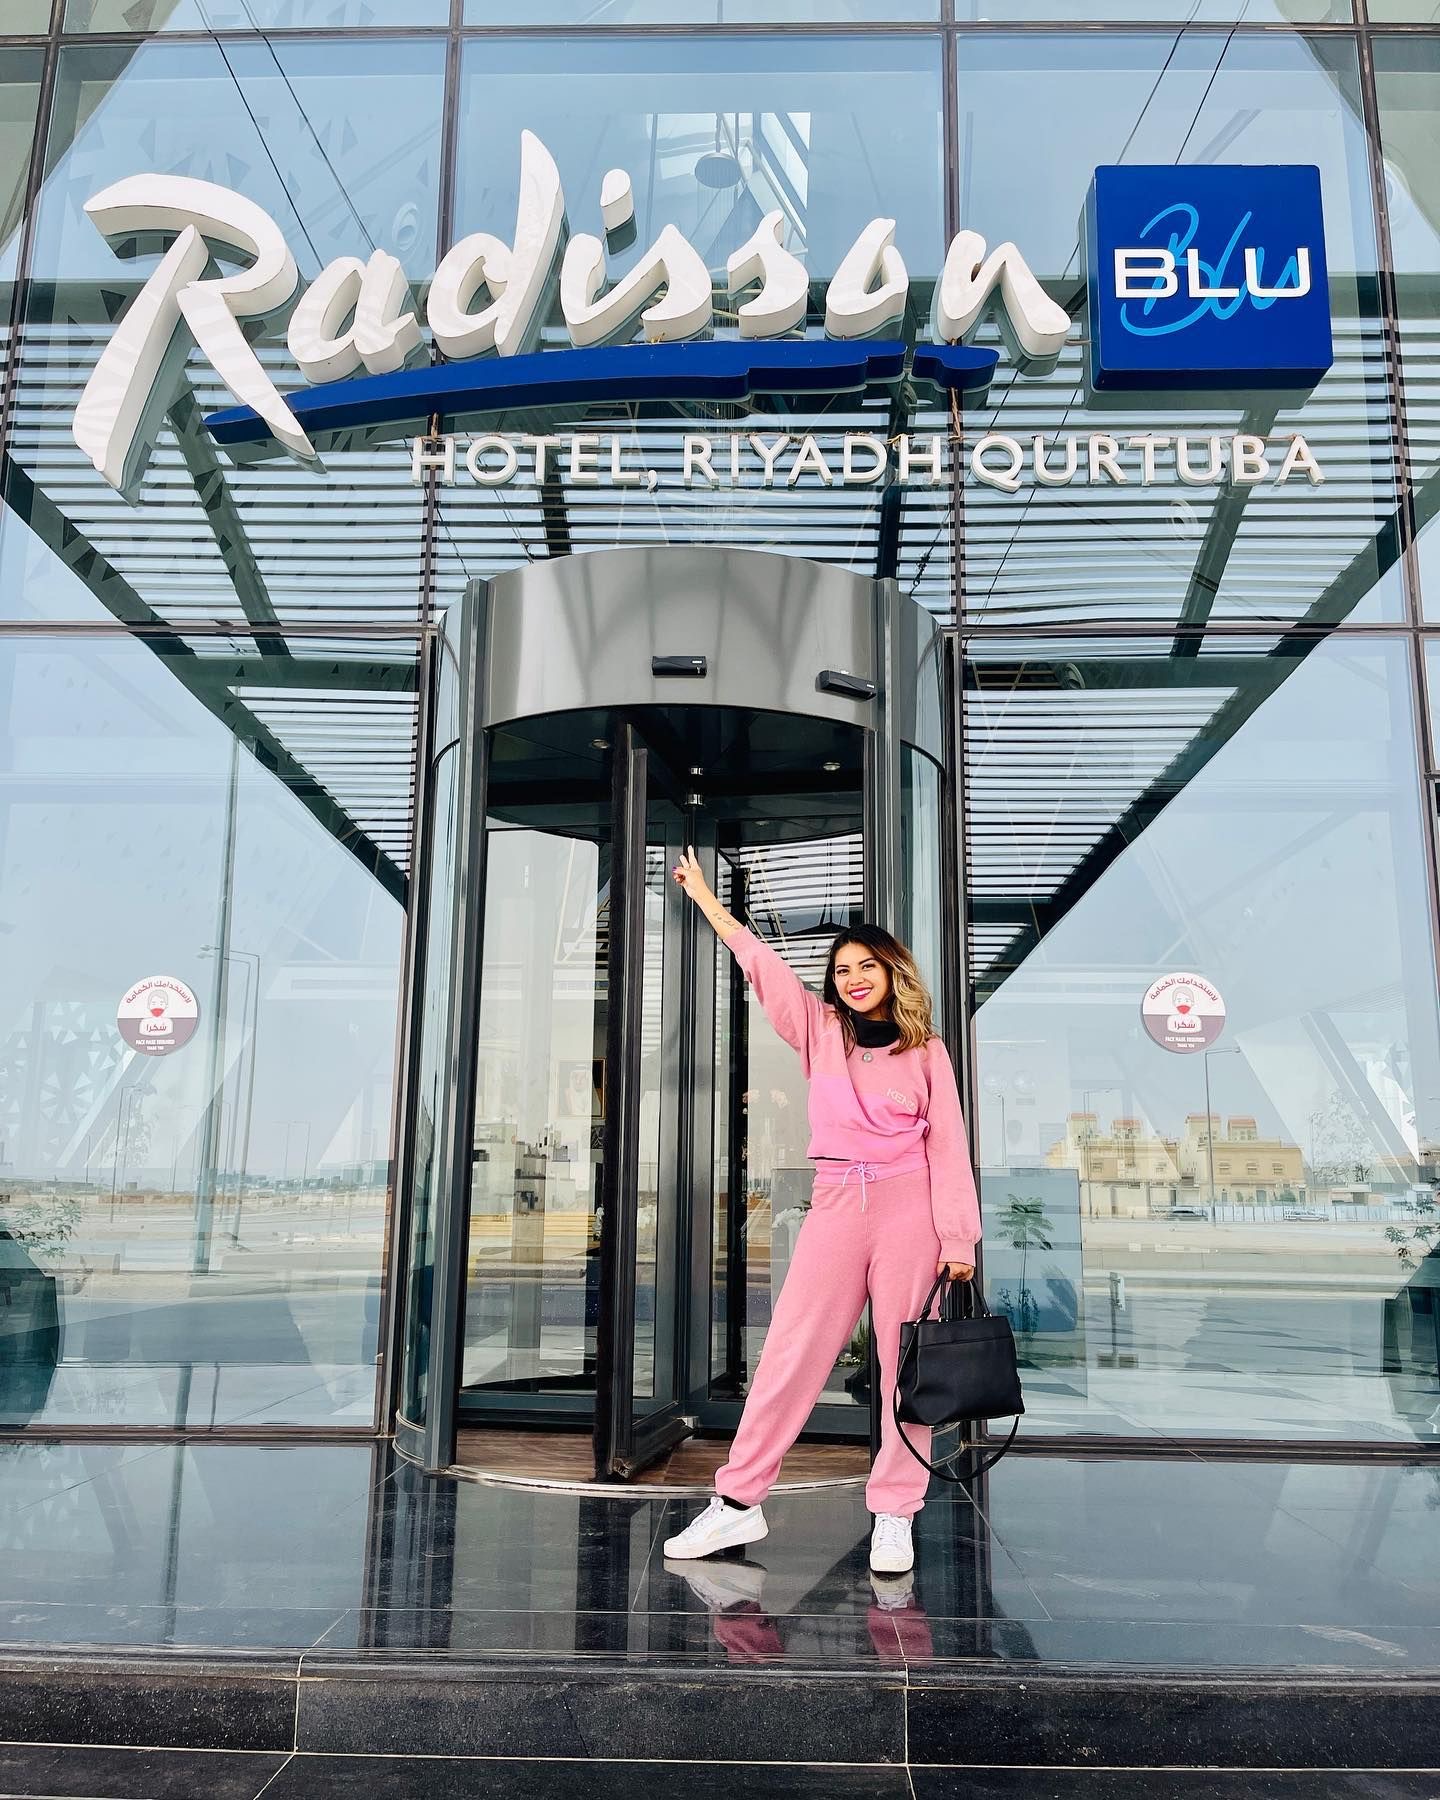 Radisson Blu Hotel, Riyadh Corteba is visiting my 171 countries!